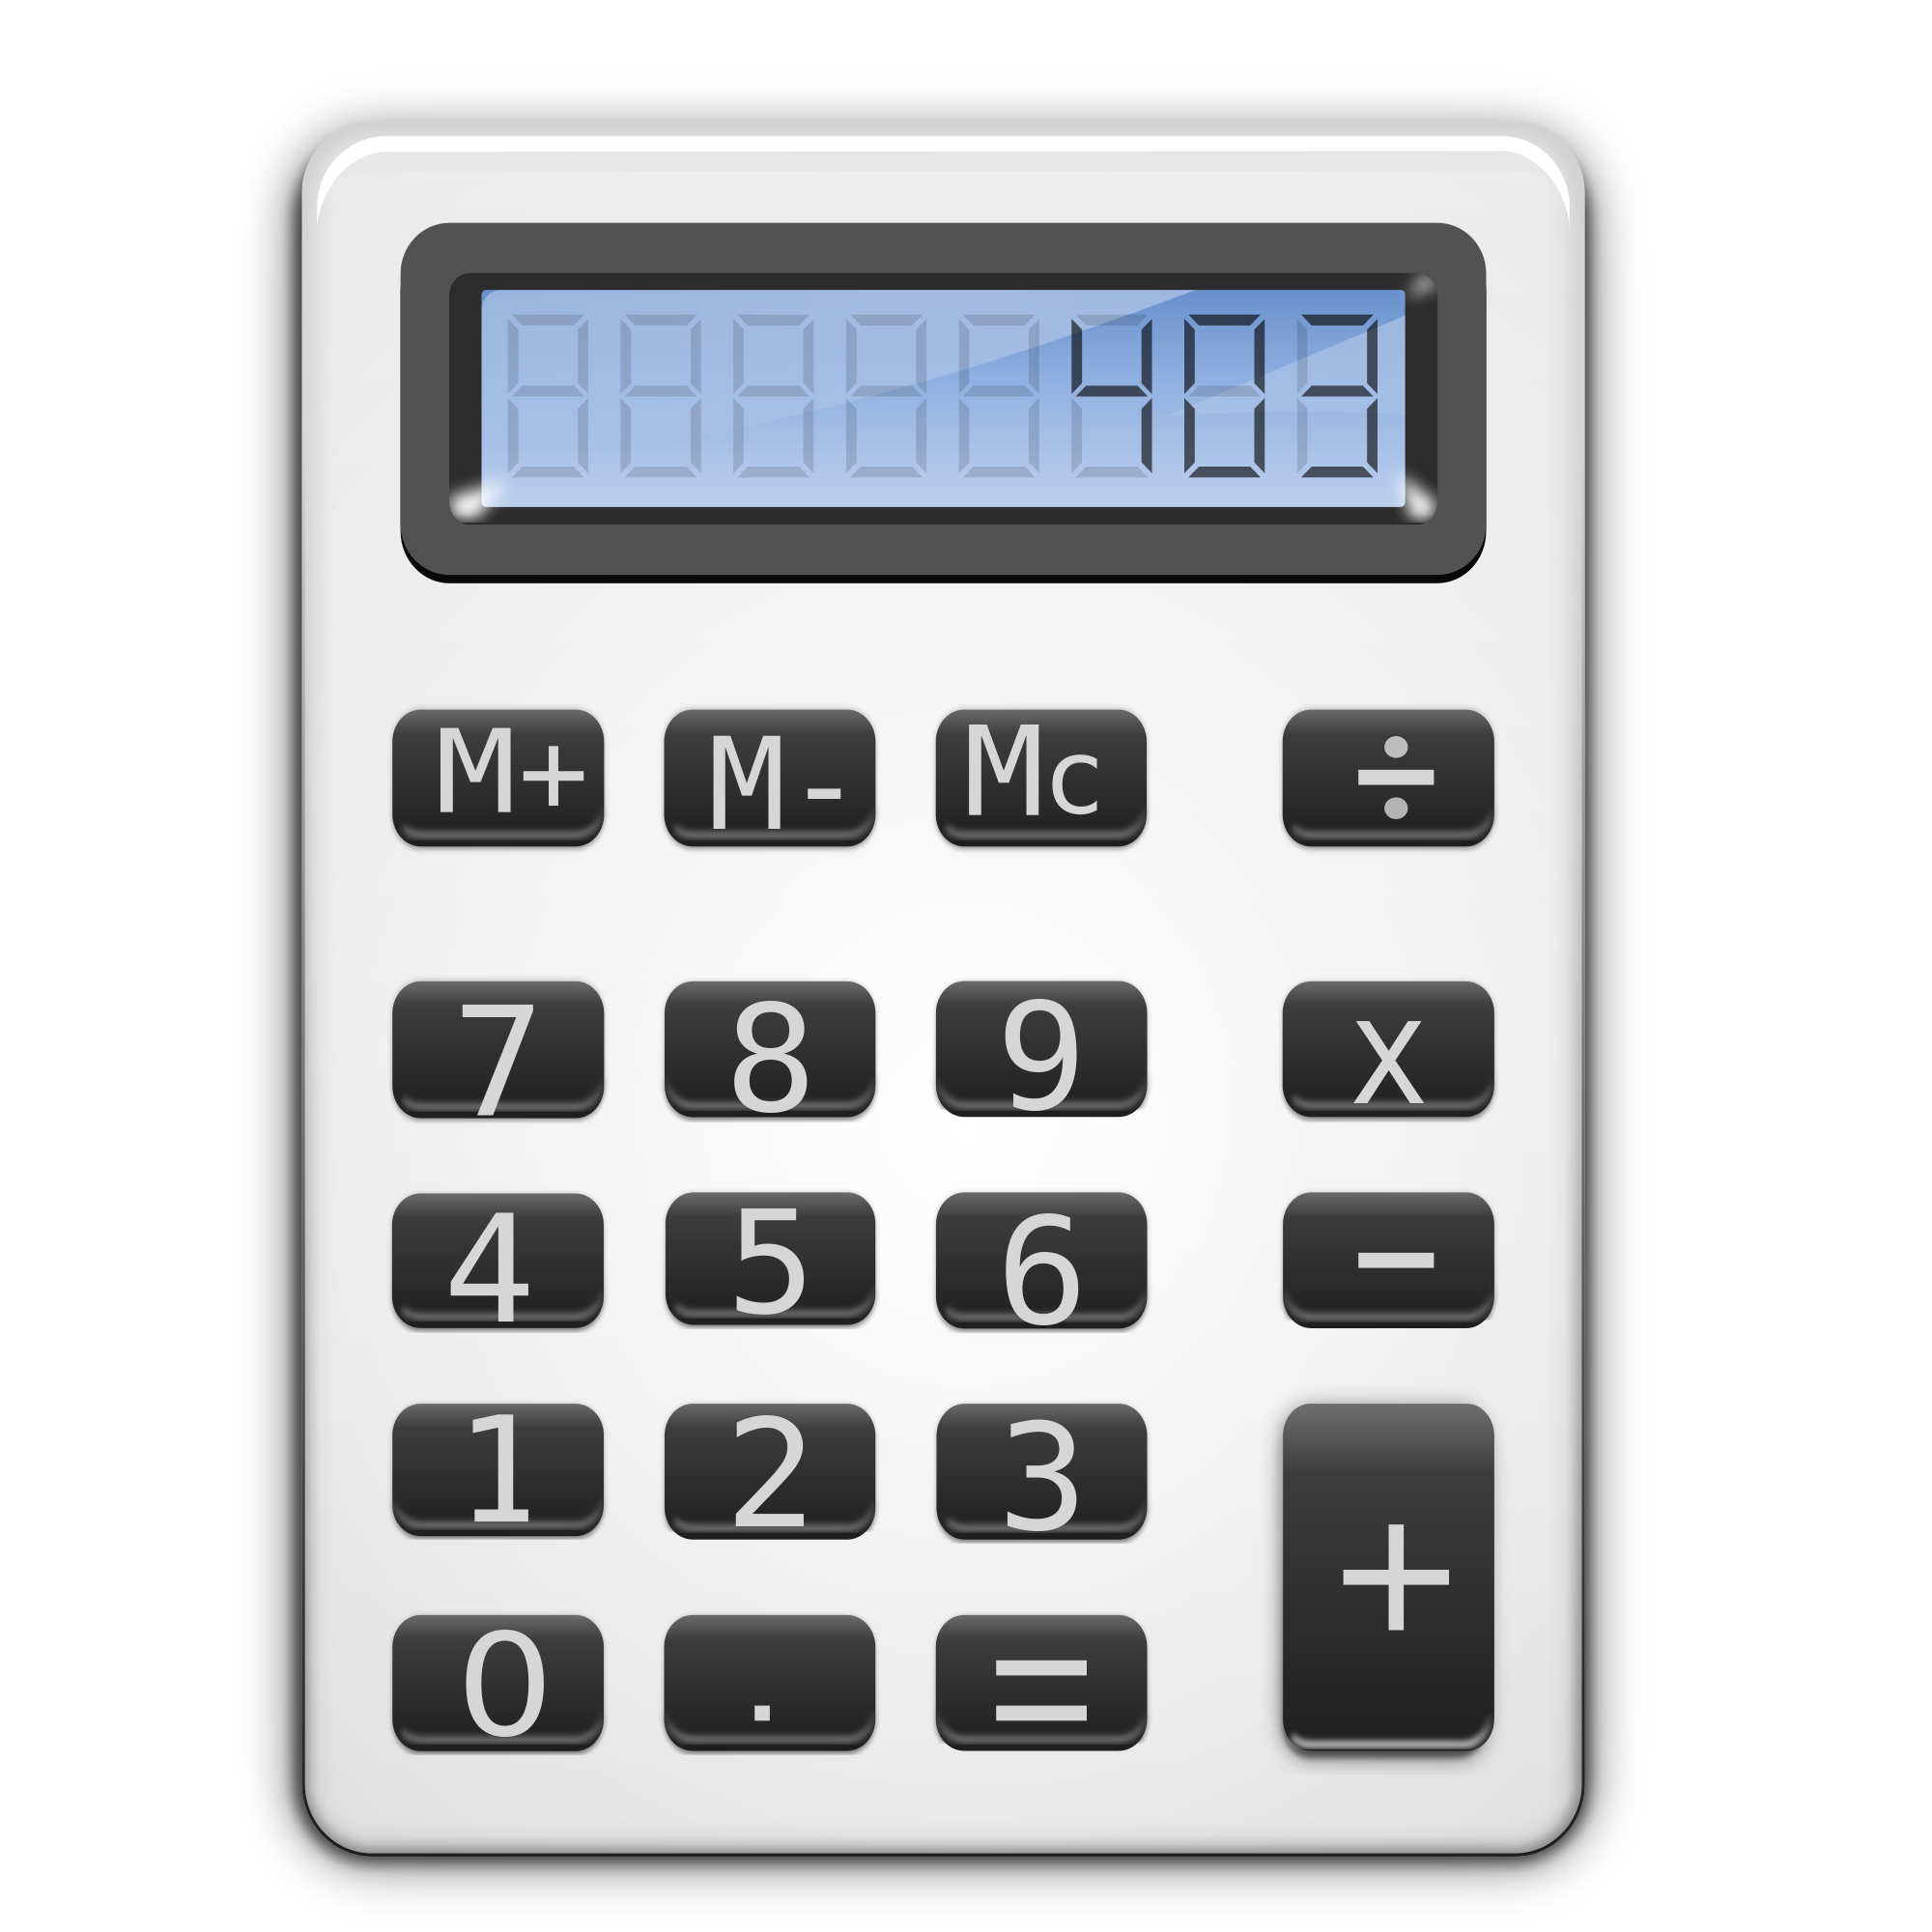 purepng.com-calculatorcalculatorportable-electroniccalculationselectronicssmall-deviceelectronic-calculator-1701528343949tidvc.png